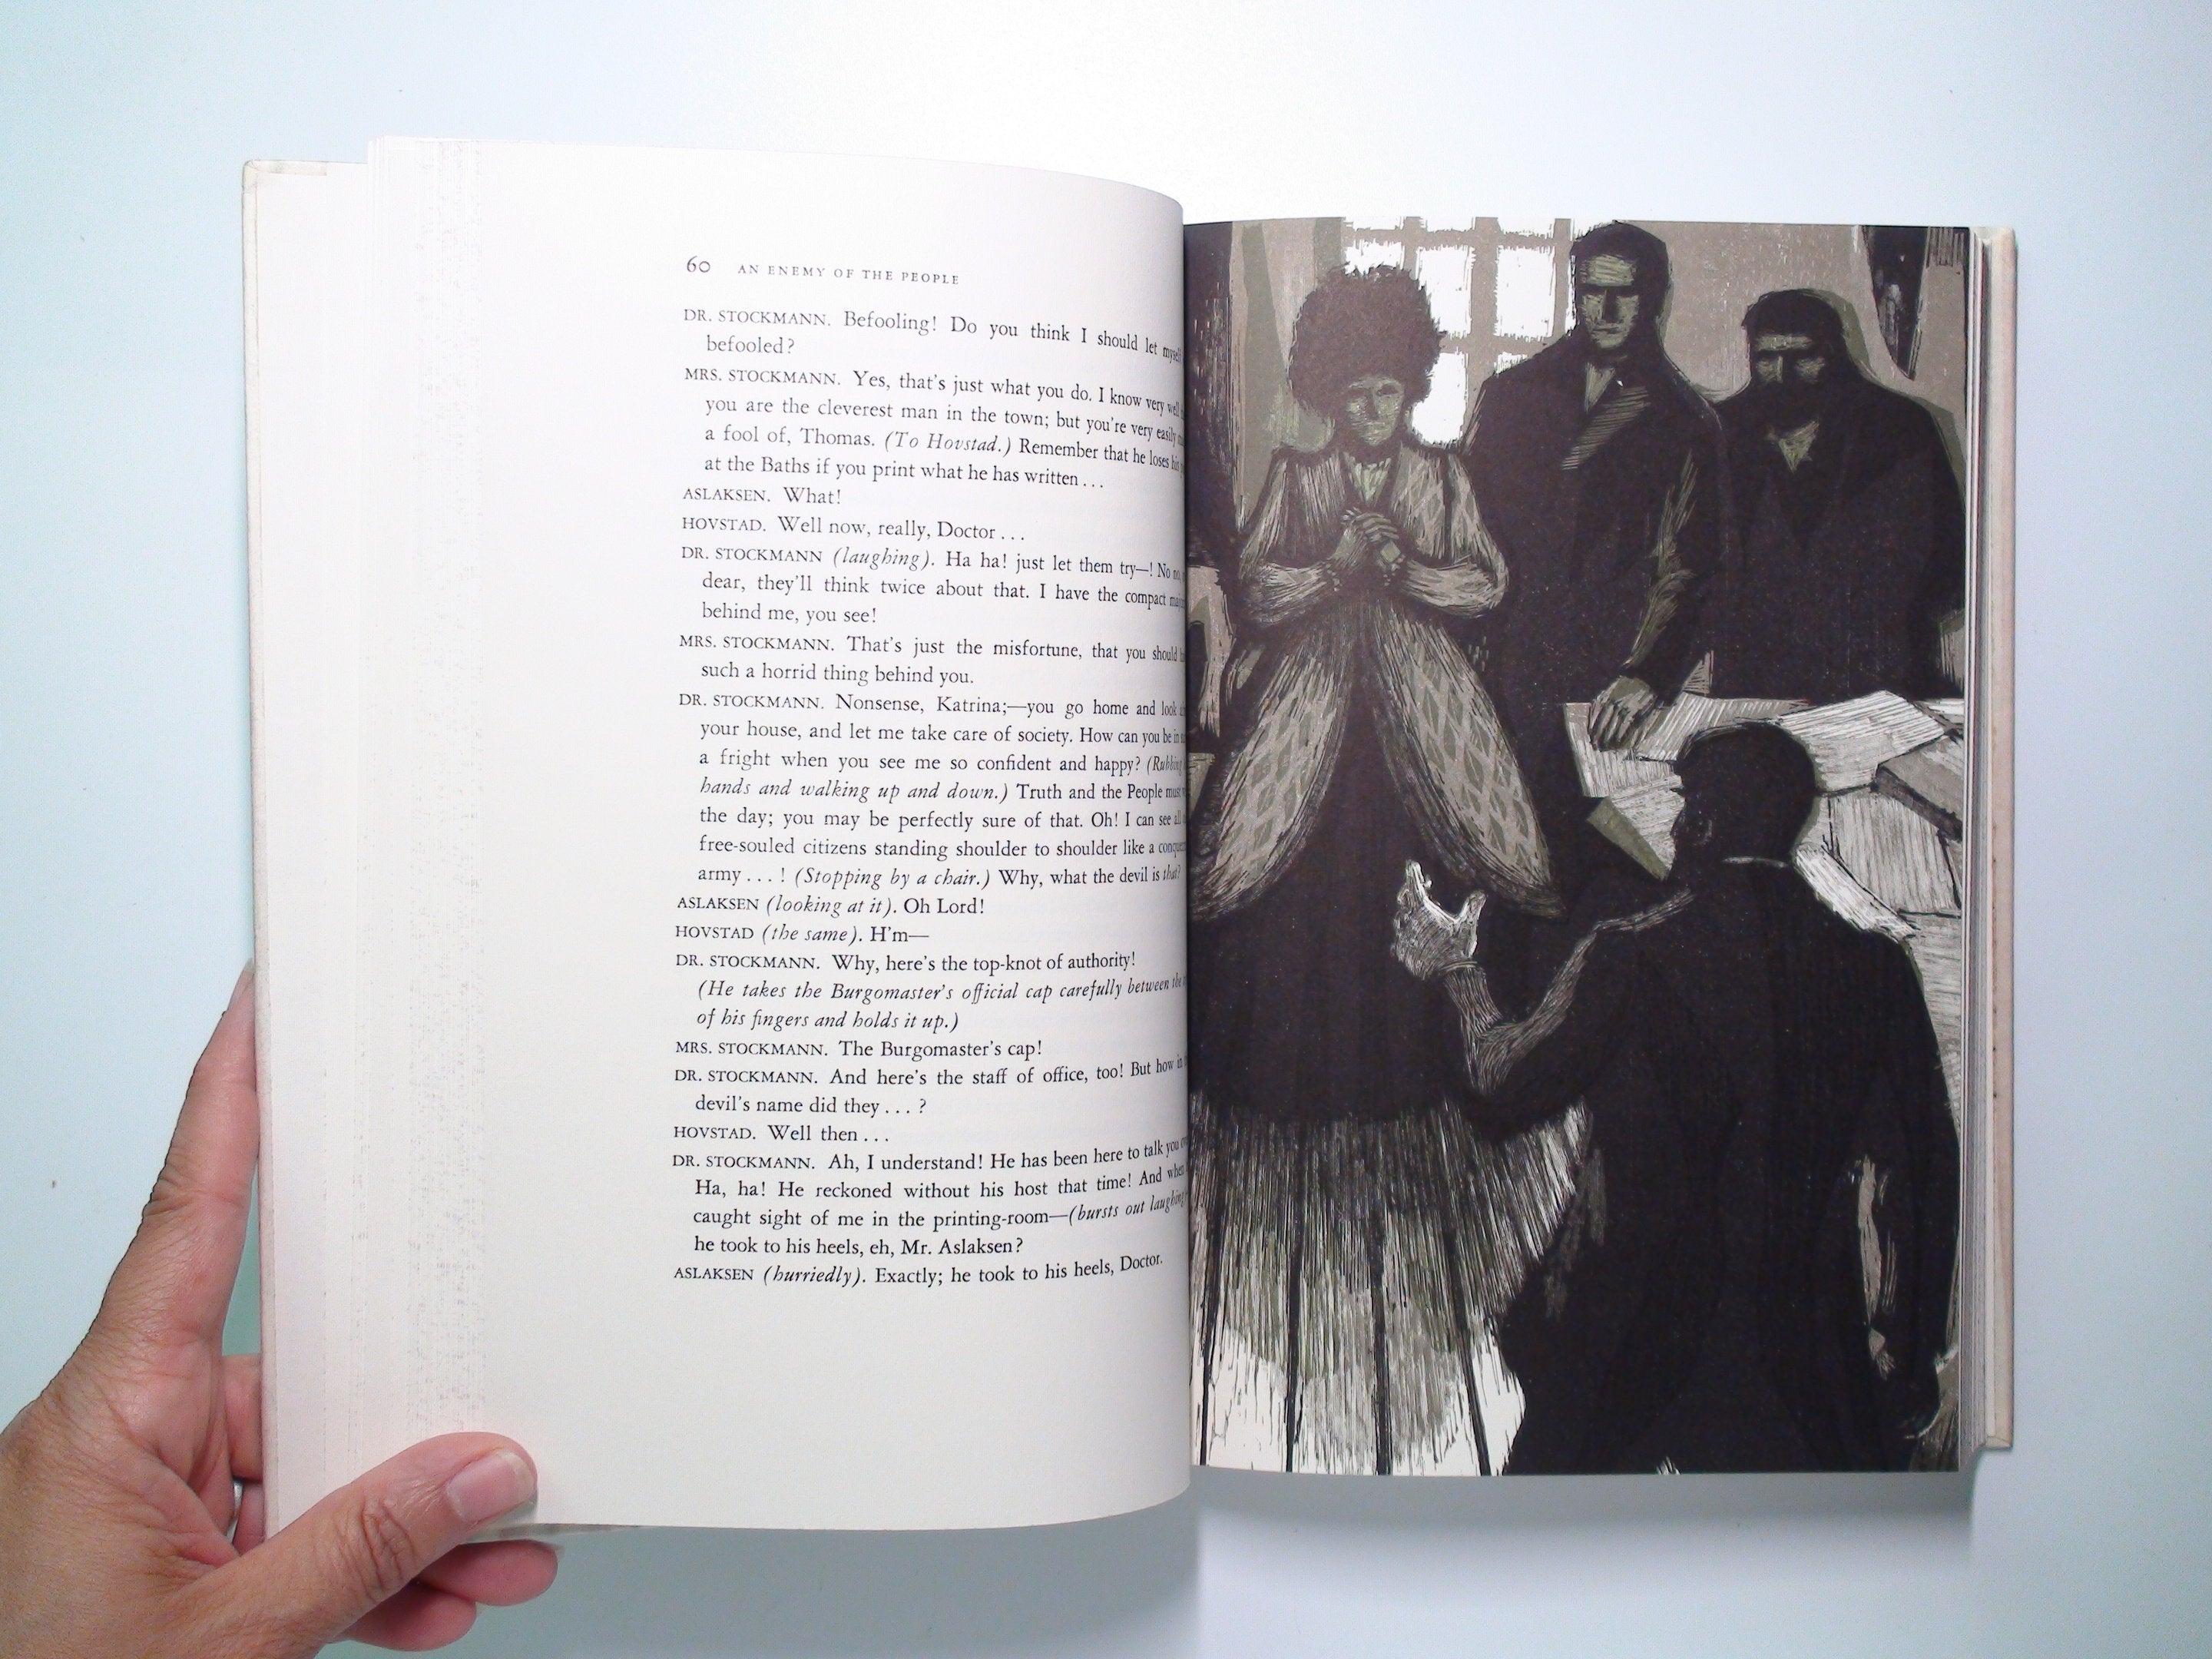 Three Plays of Henrik Ibsen, Illustrated, 1st Ed, in Original Slipcase, 1965